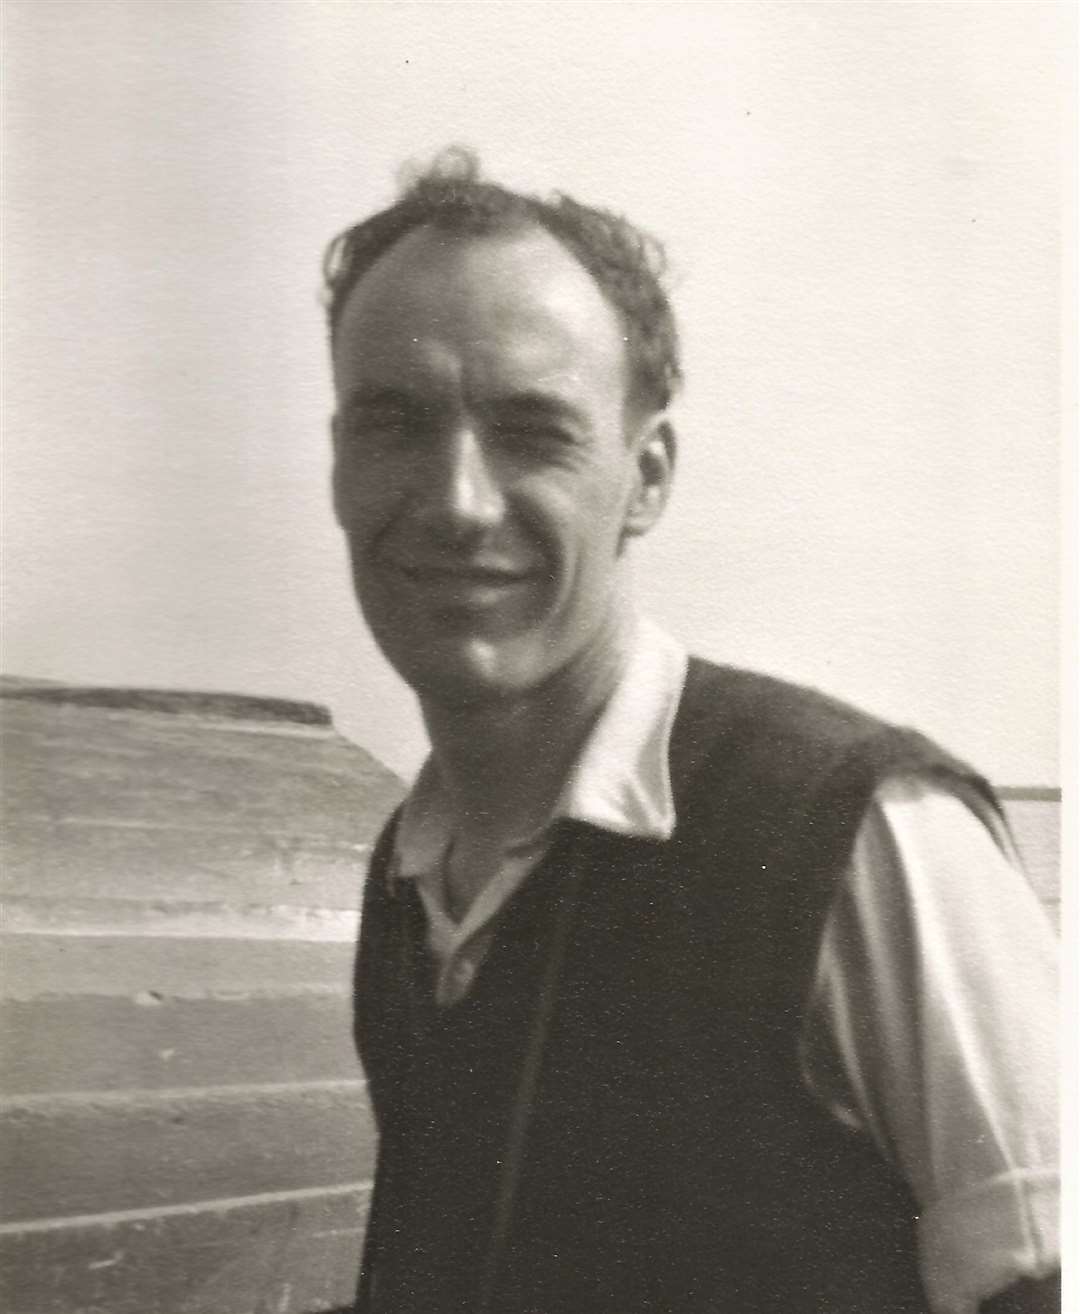 Dennis Reeve, owner of Reeve's Garage in Dartford, passed away last month aged 93